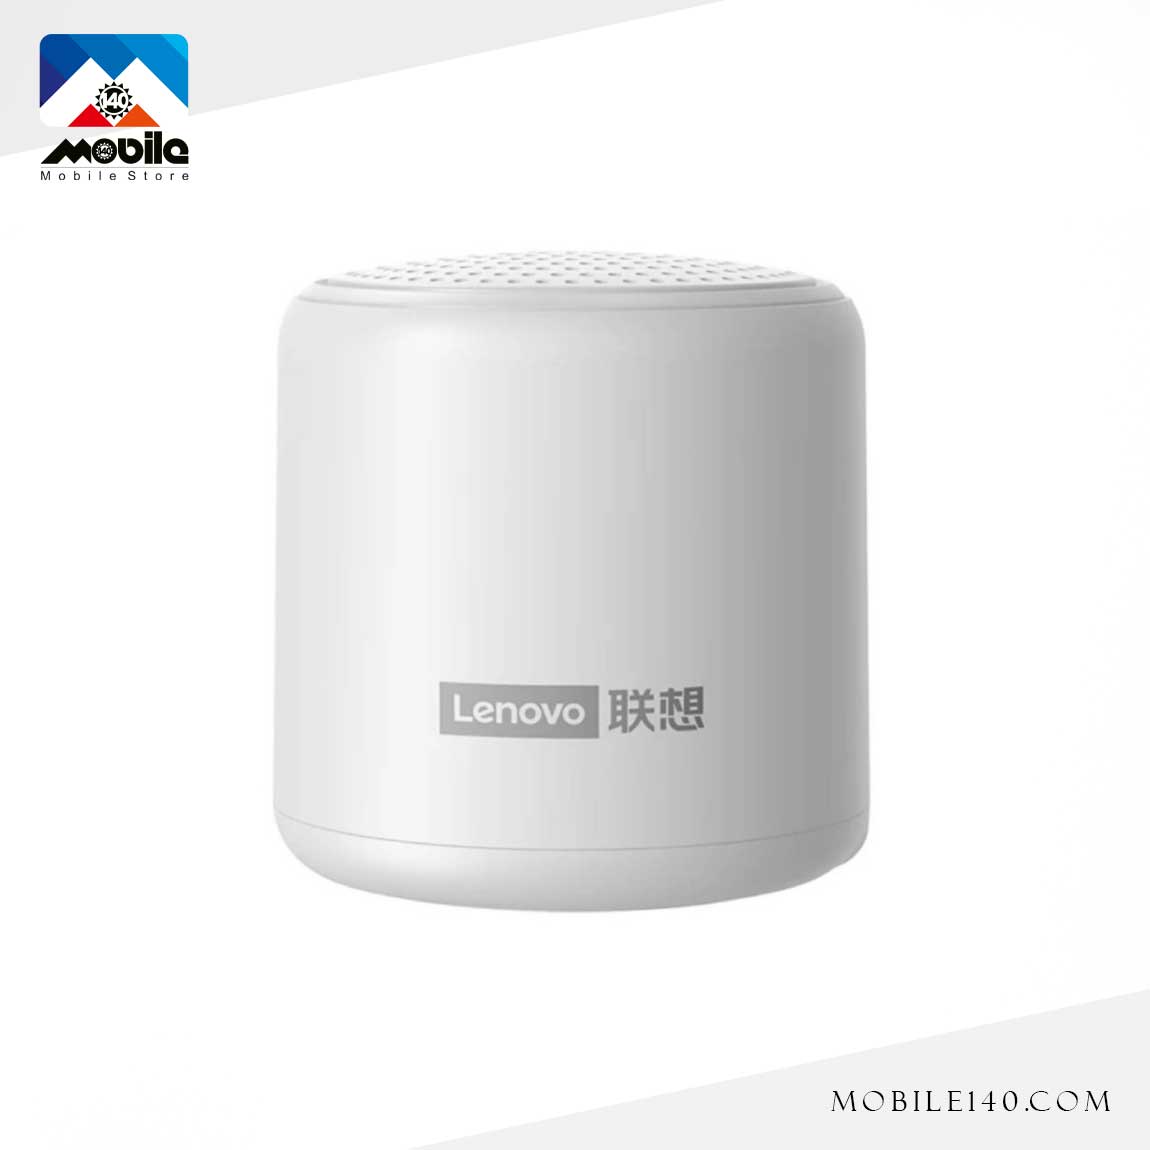 Lenovo L01 Bluetooth Speaker 1